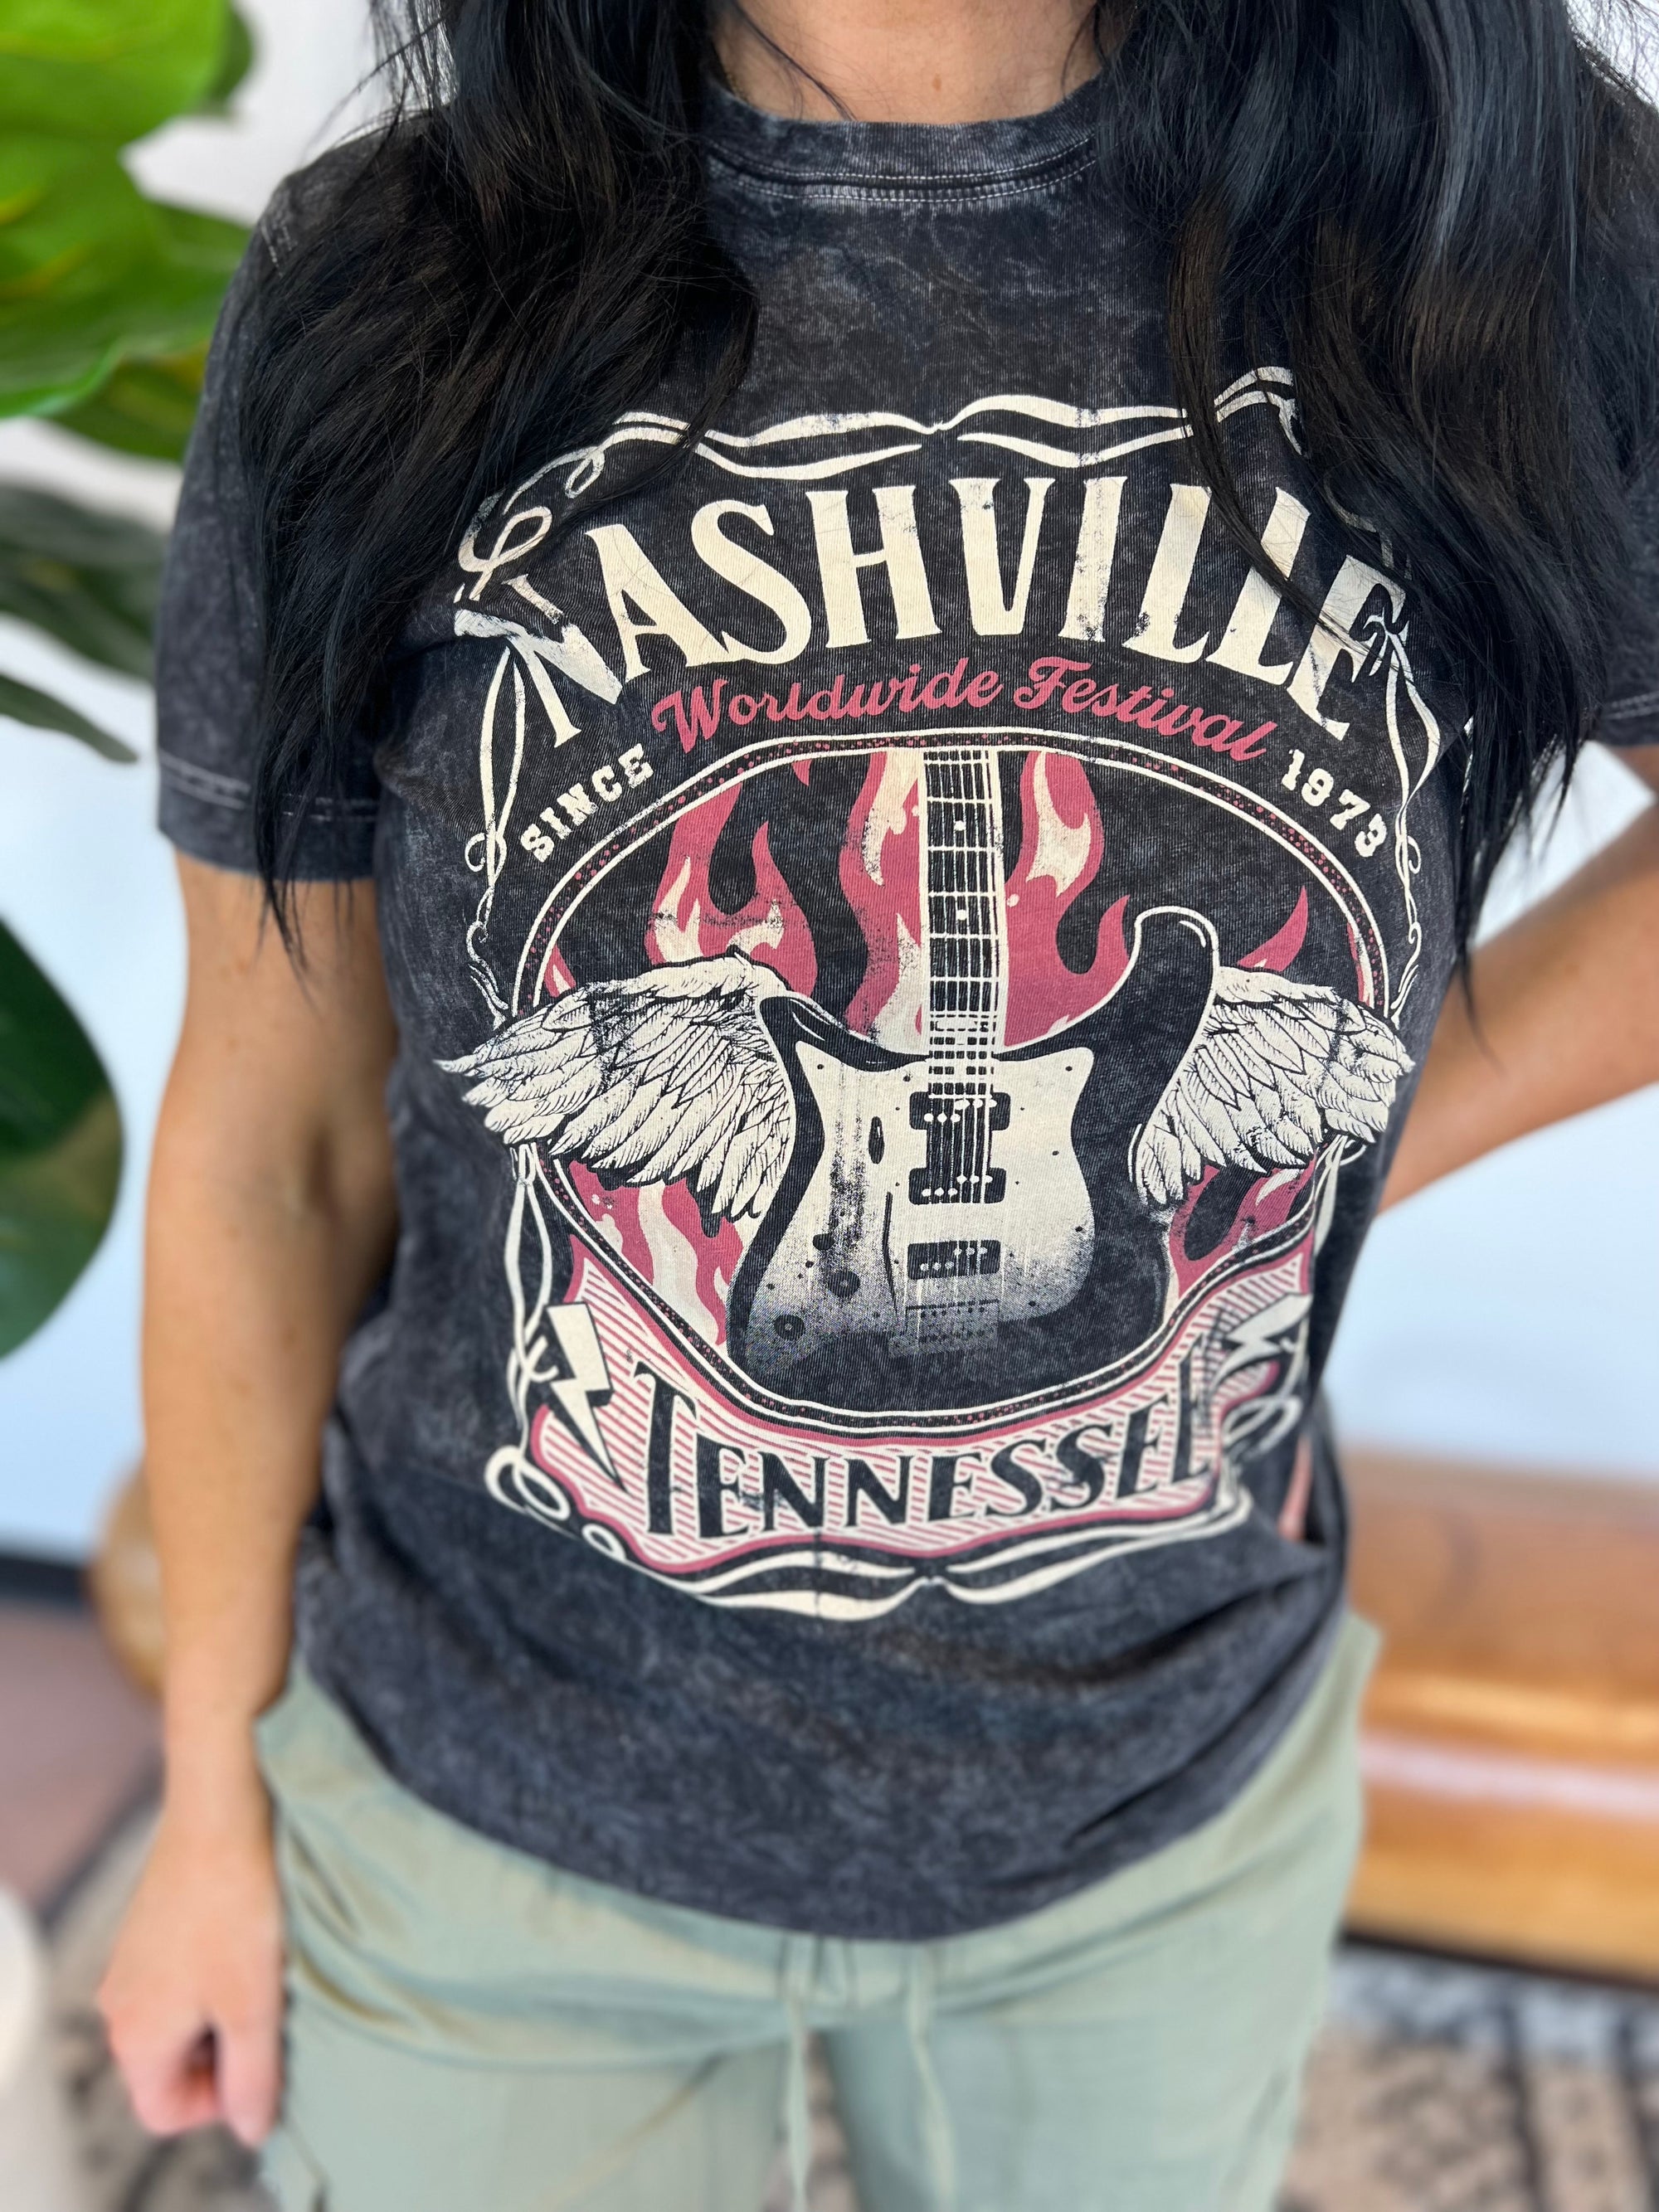 The Nashville Graphic T-Shirt